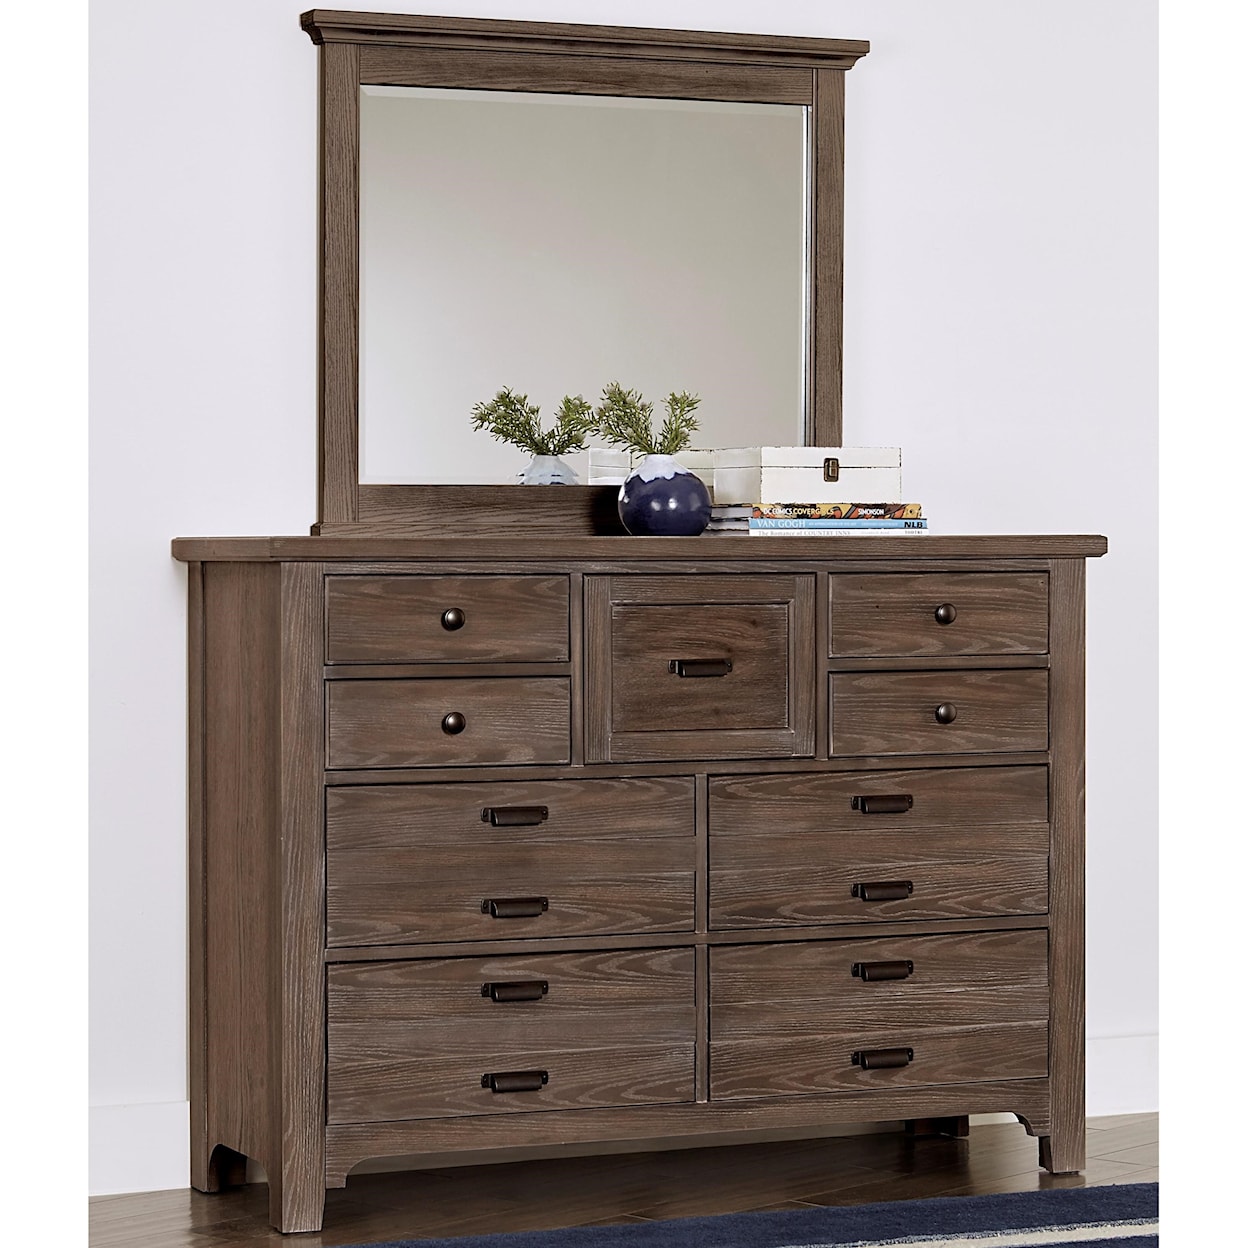 Laurel Mercantile Co. Bungalow 9-Drawer Dresser and Landscape Mirror Set